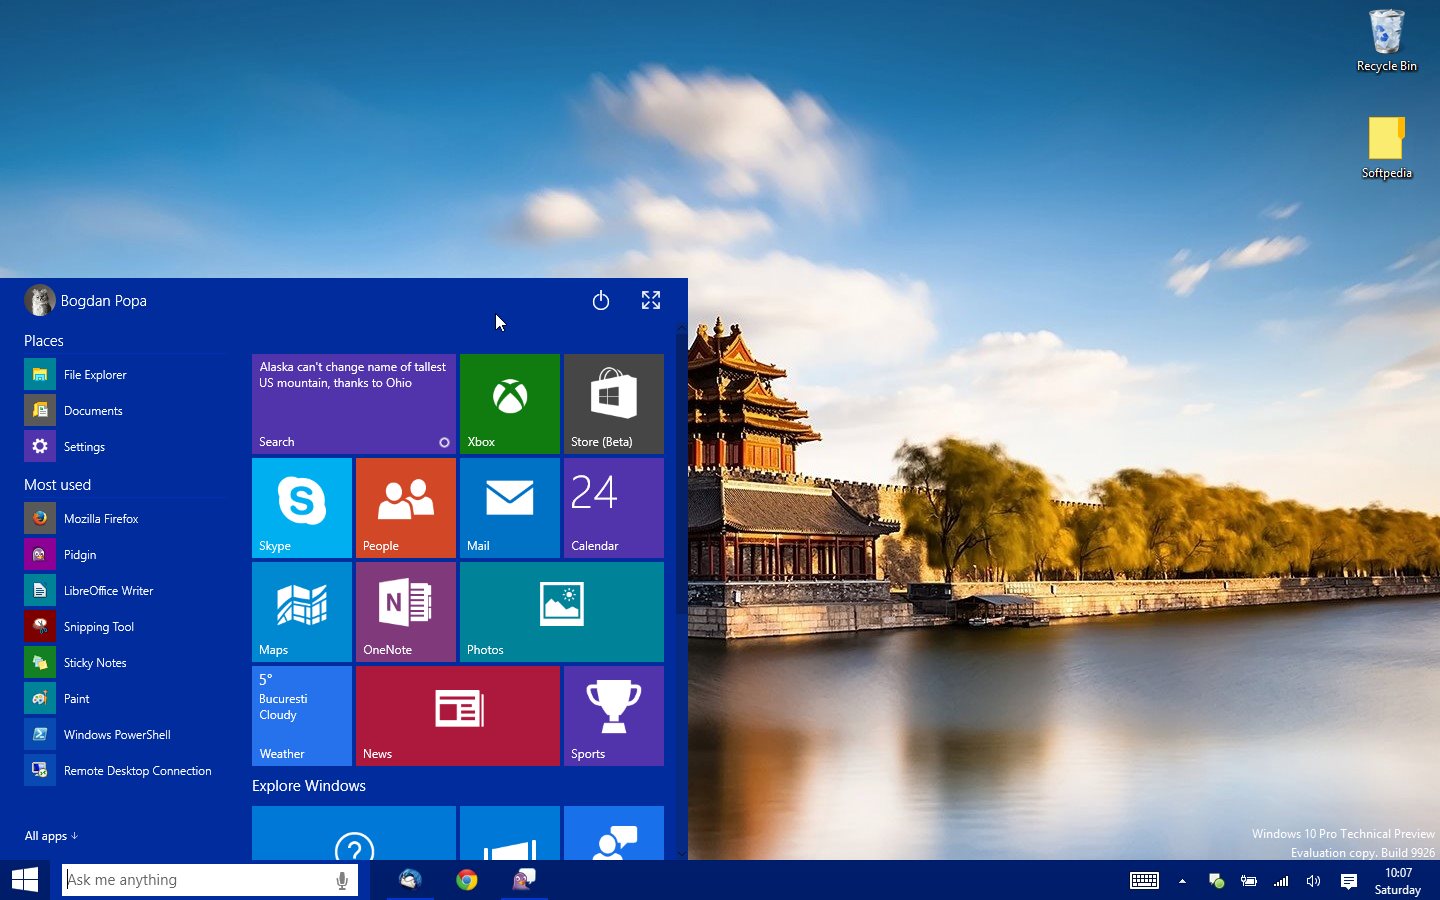 Is that the new Windows 10 start screen? Ooooooh ...